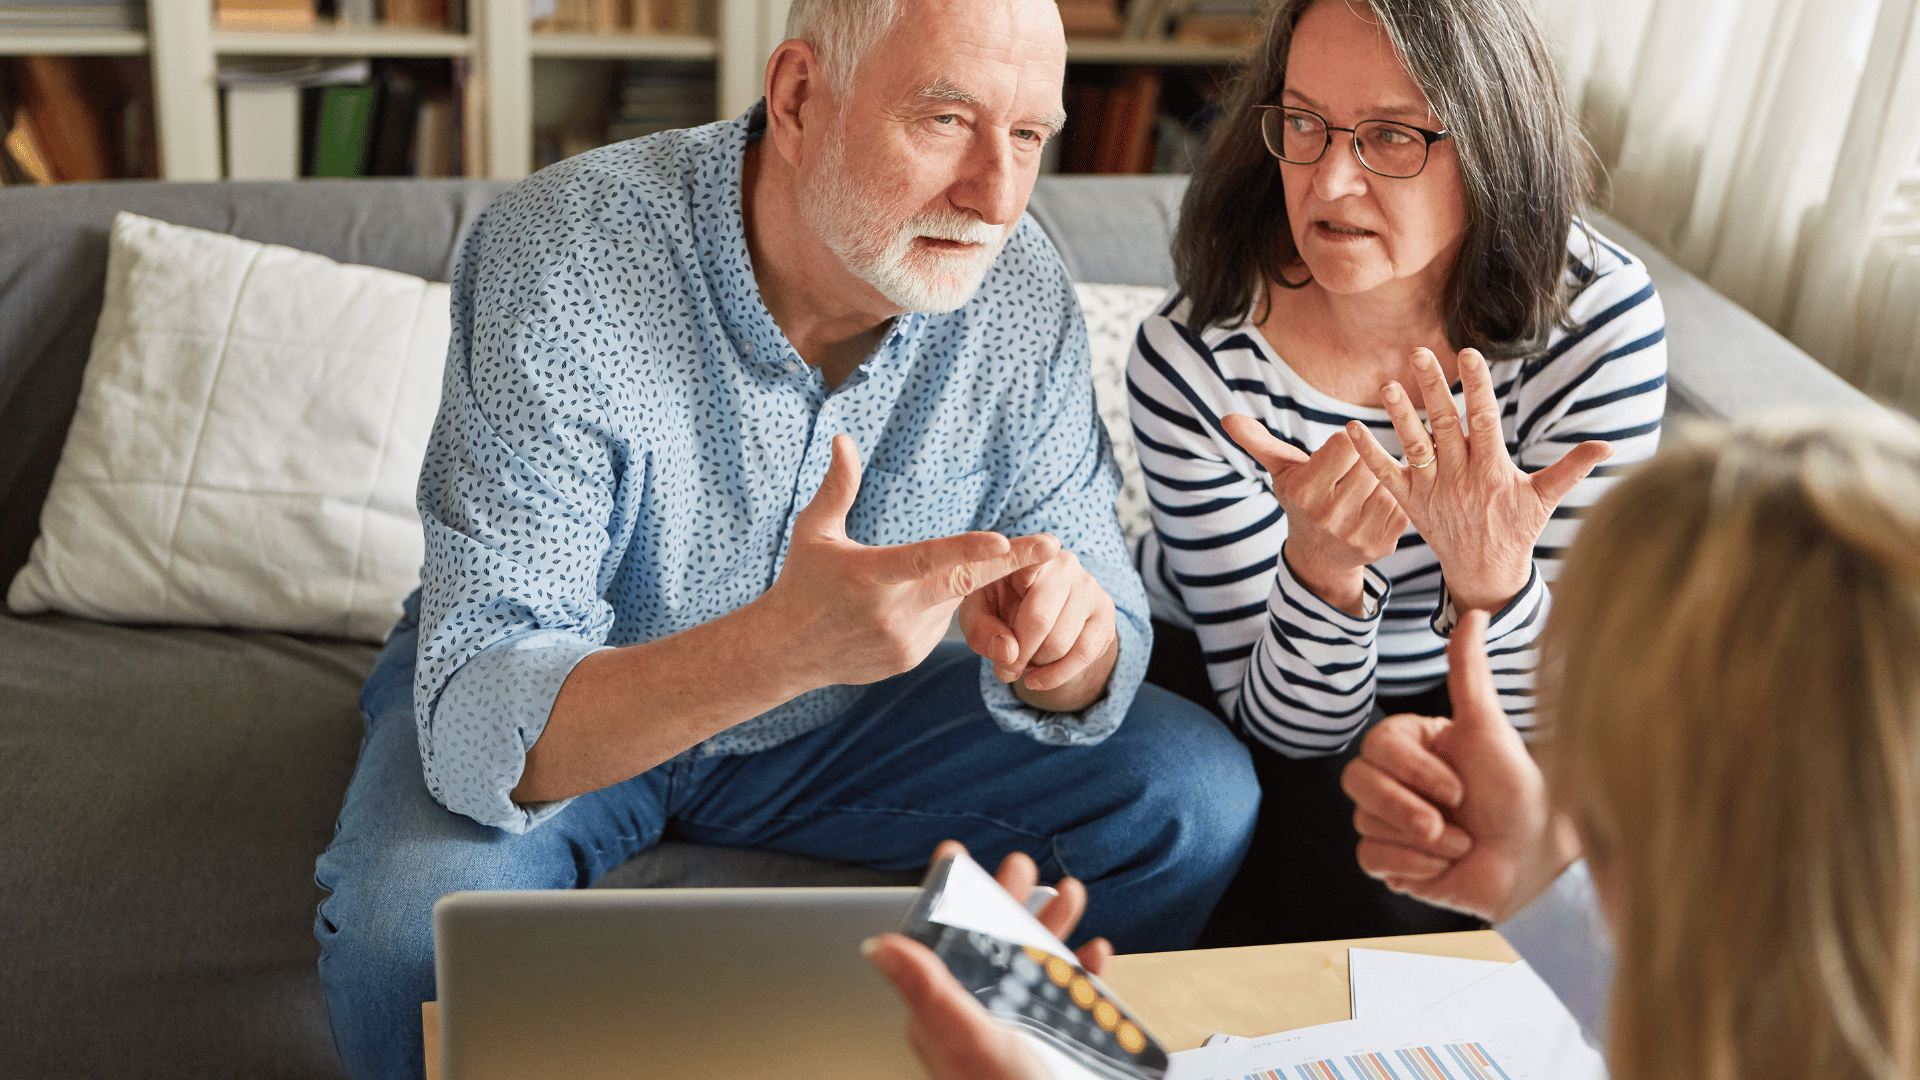 Exposing Retirement Planning Complaints